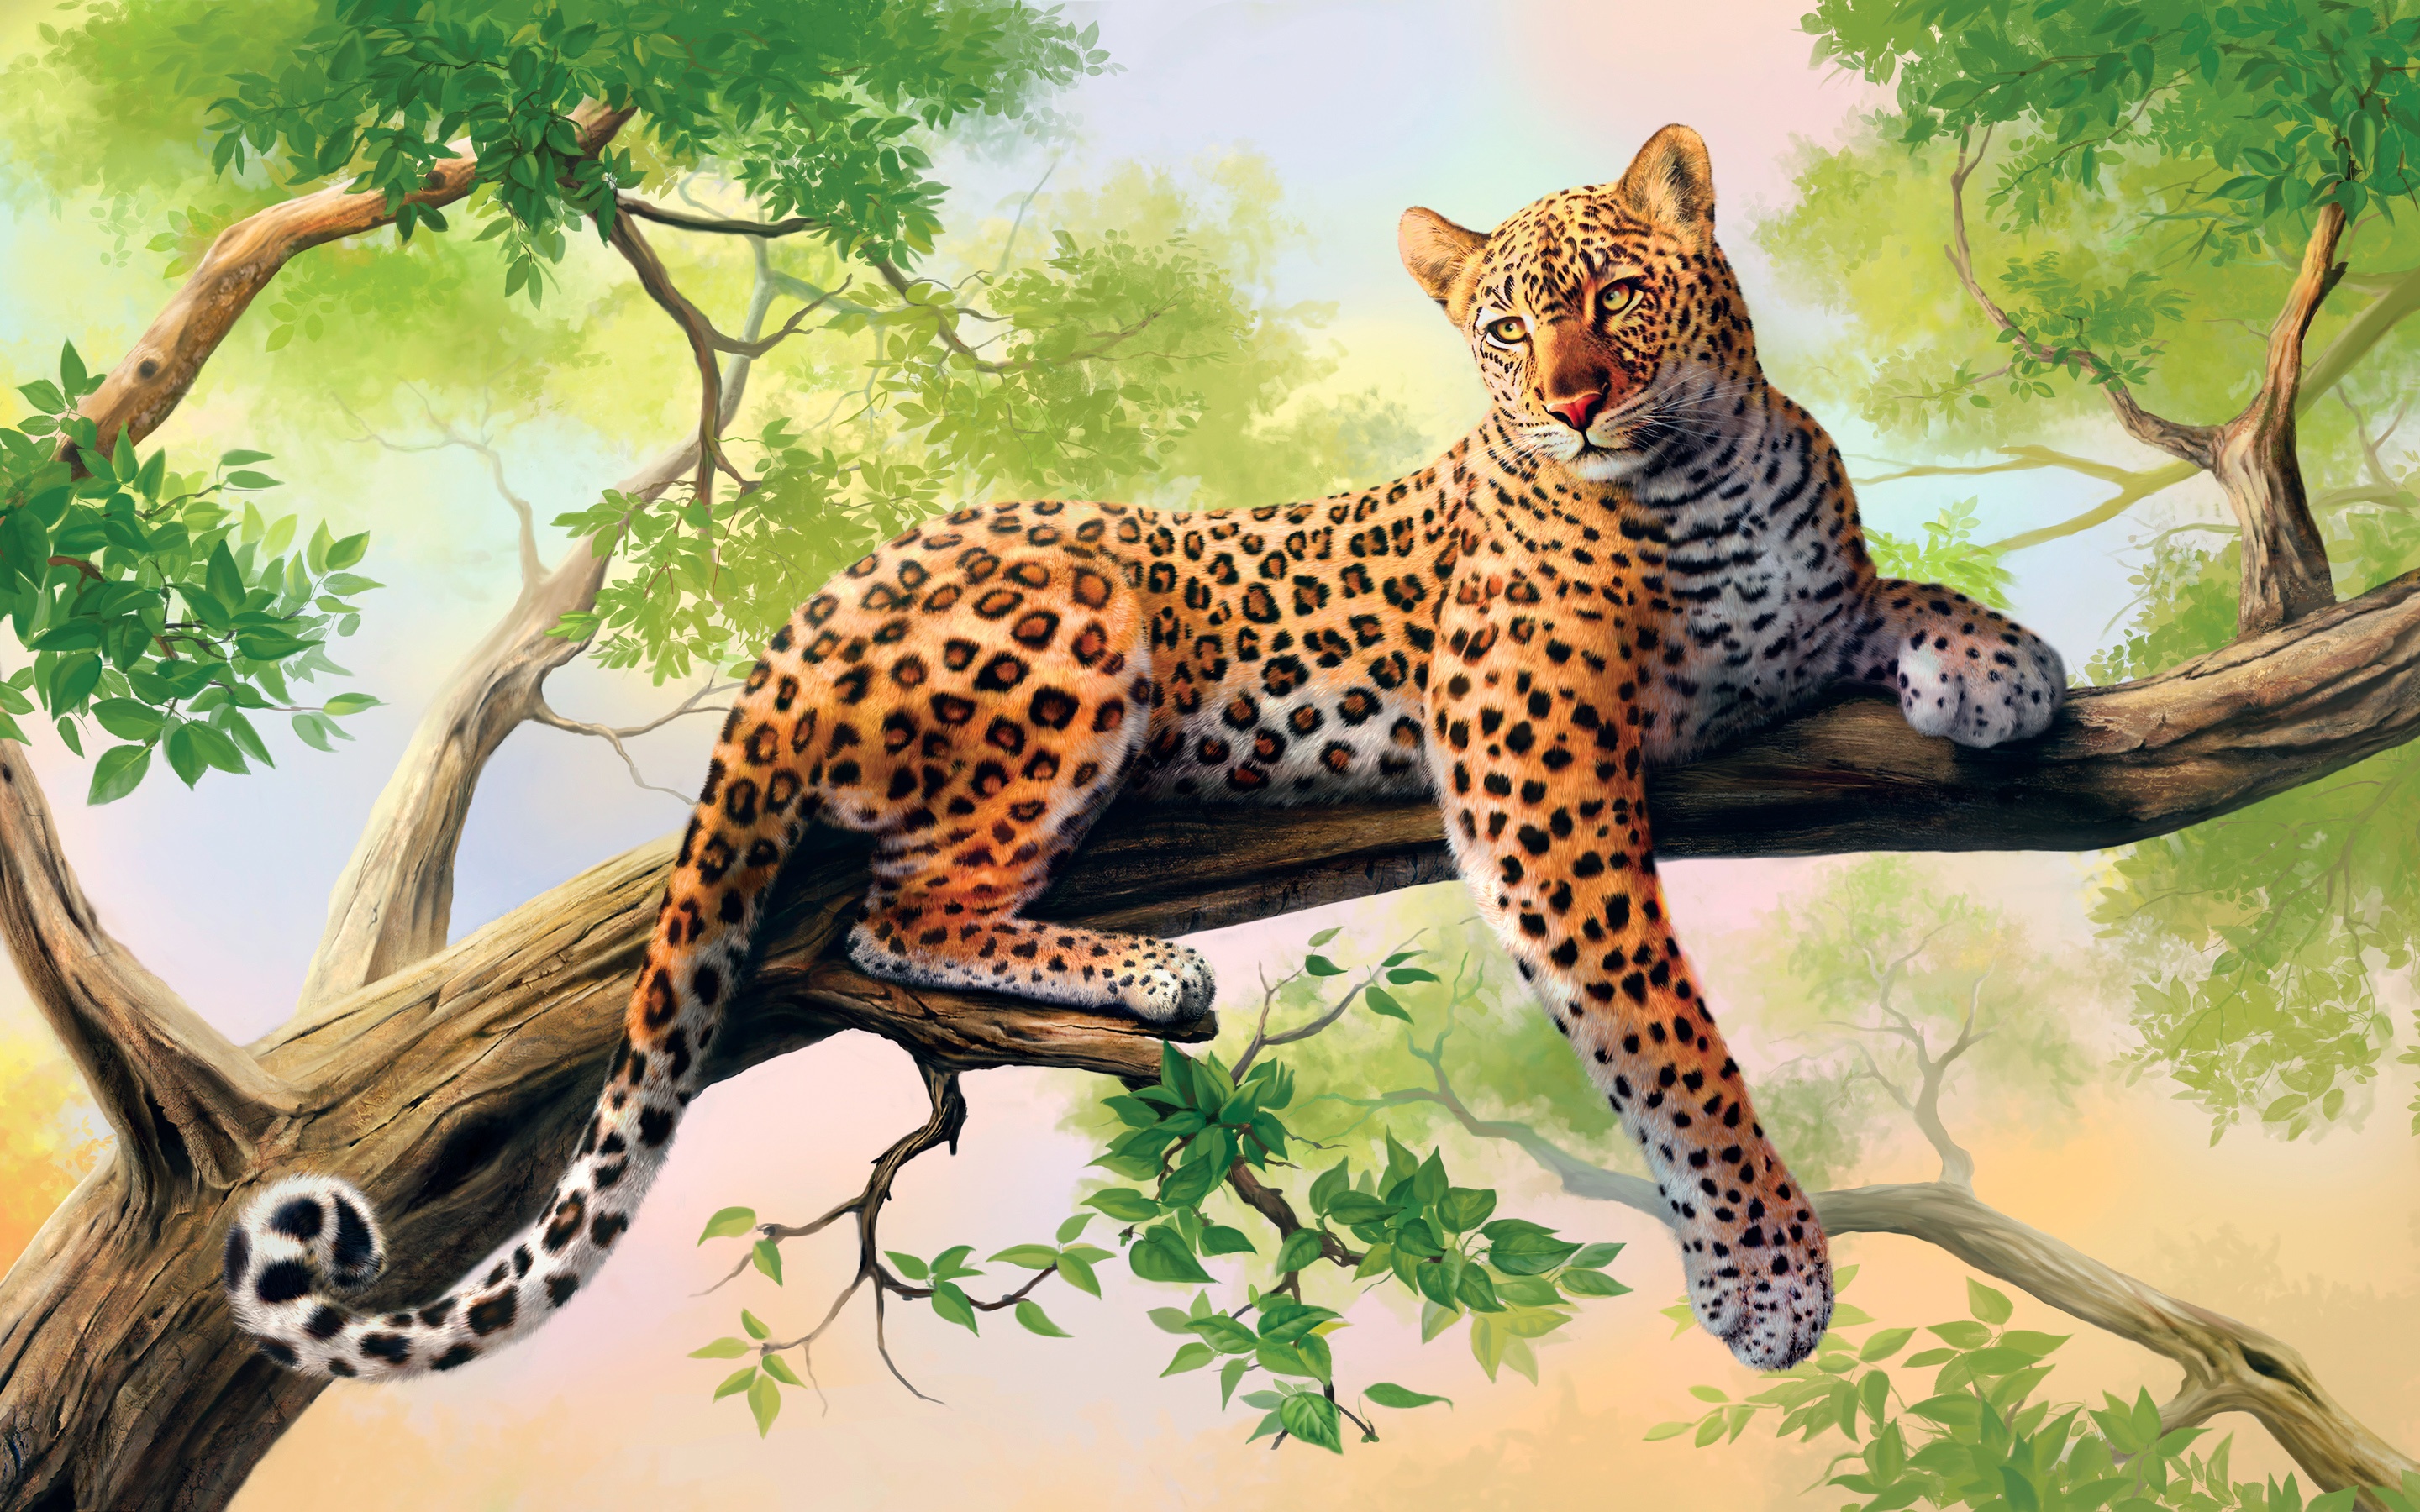 Leopard Art by Olga Grigoryeva